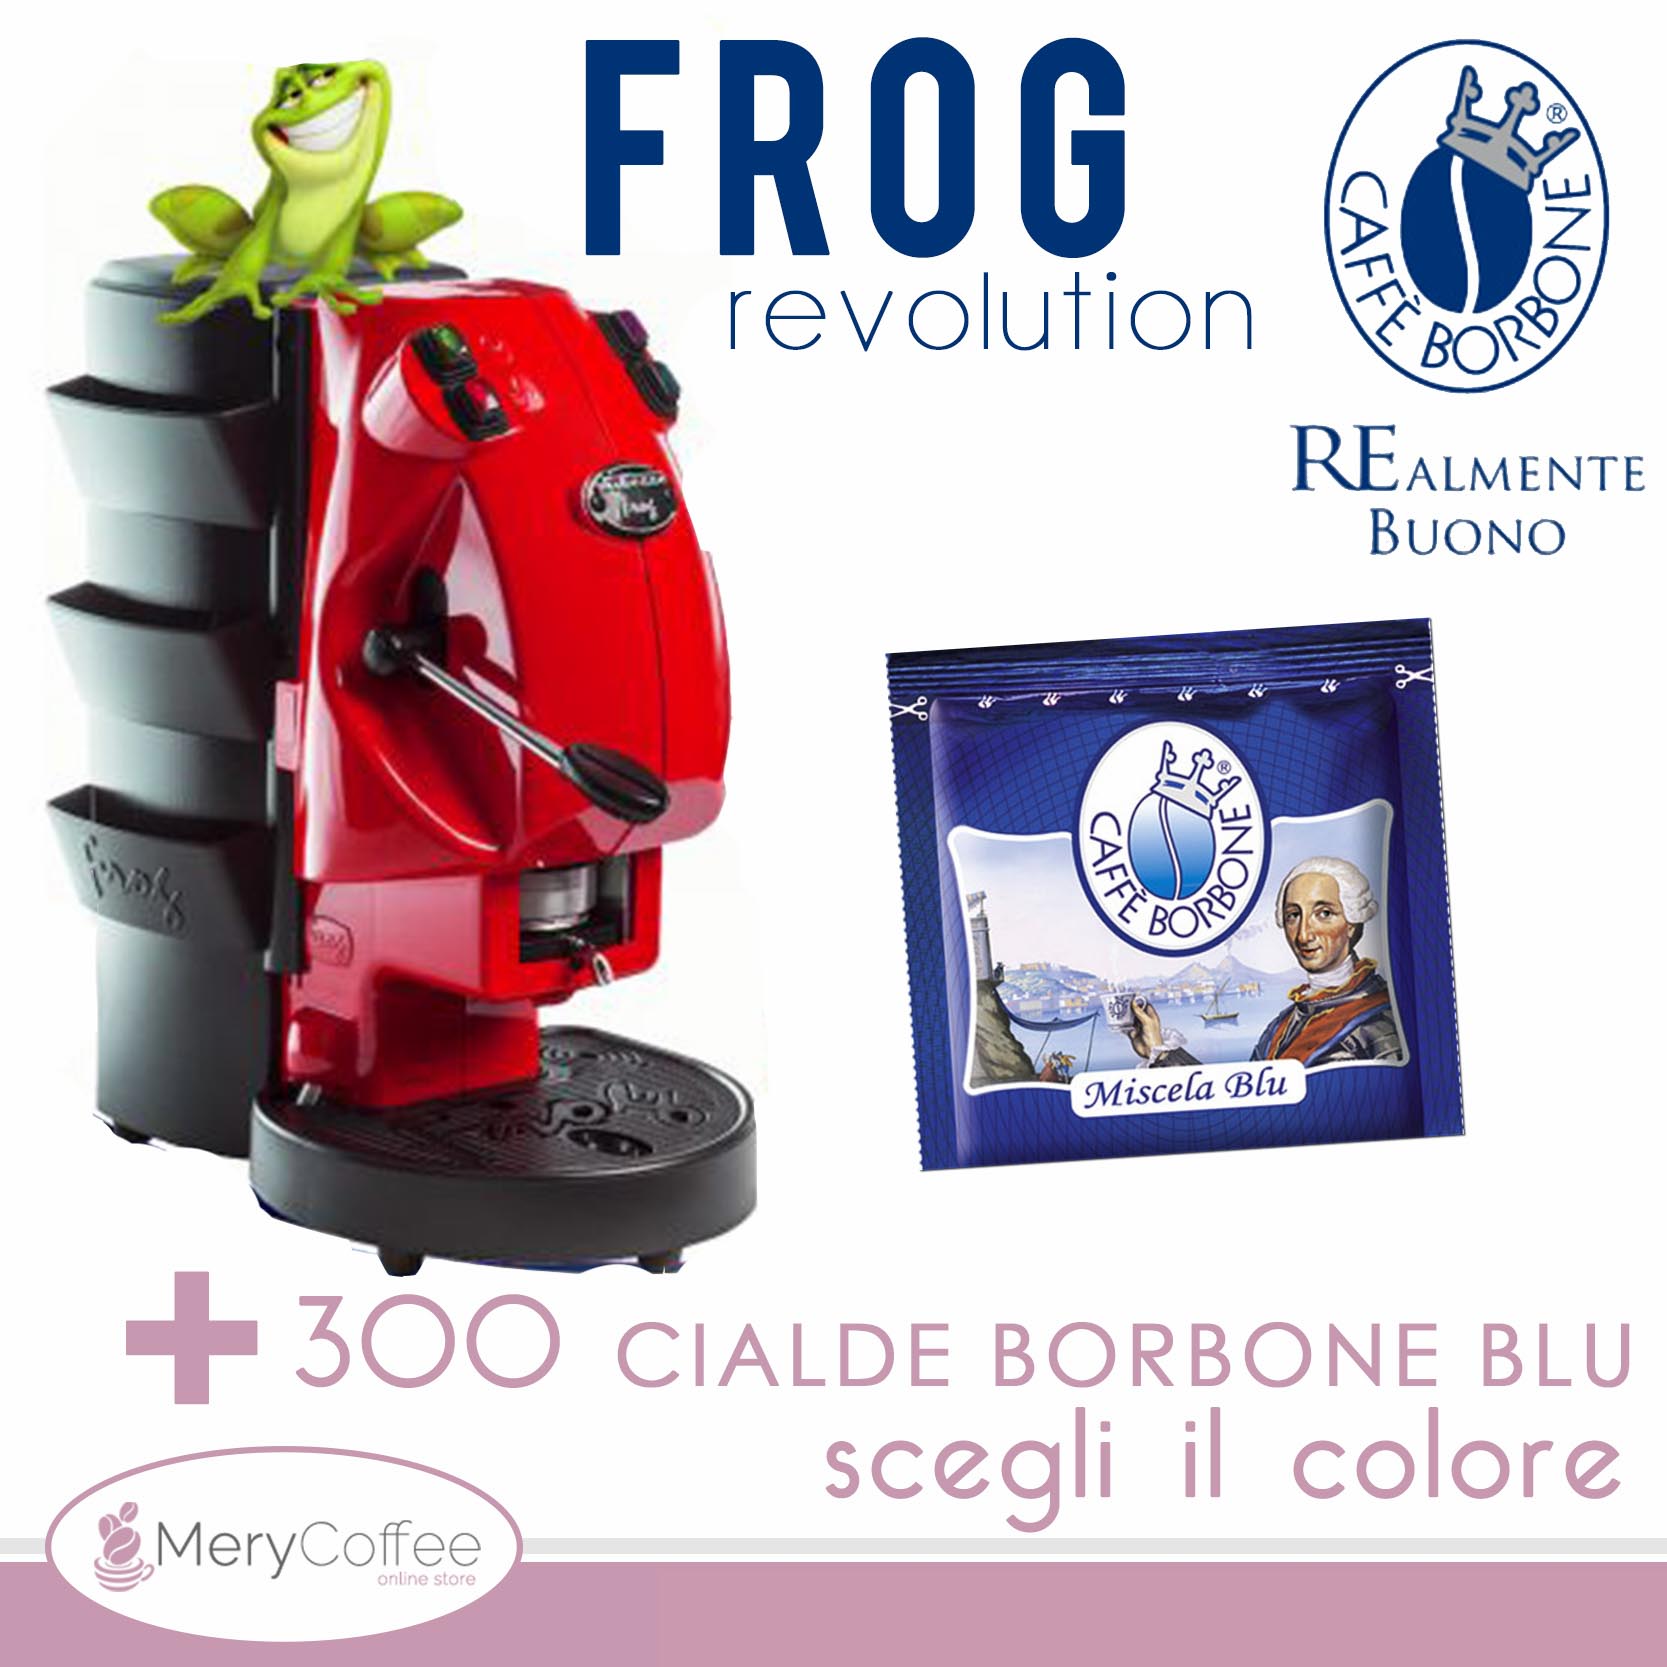 Macchina da caffè Frog con 300 Cialde Borbone Blu incluse - MeryCoffee